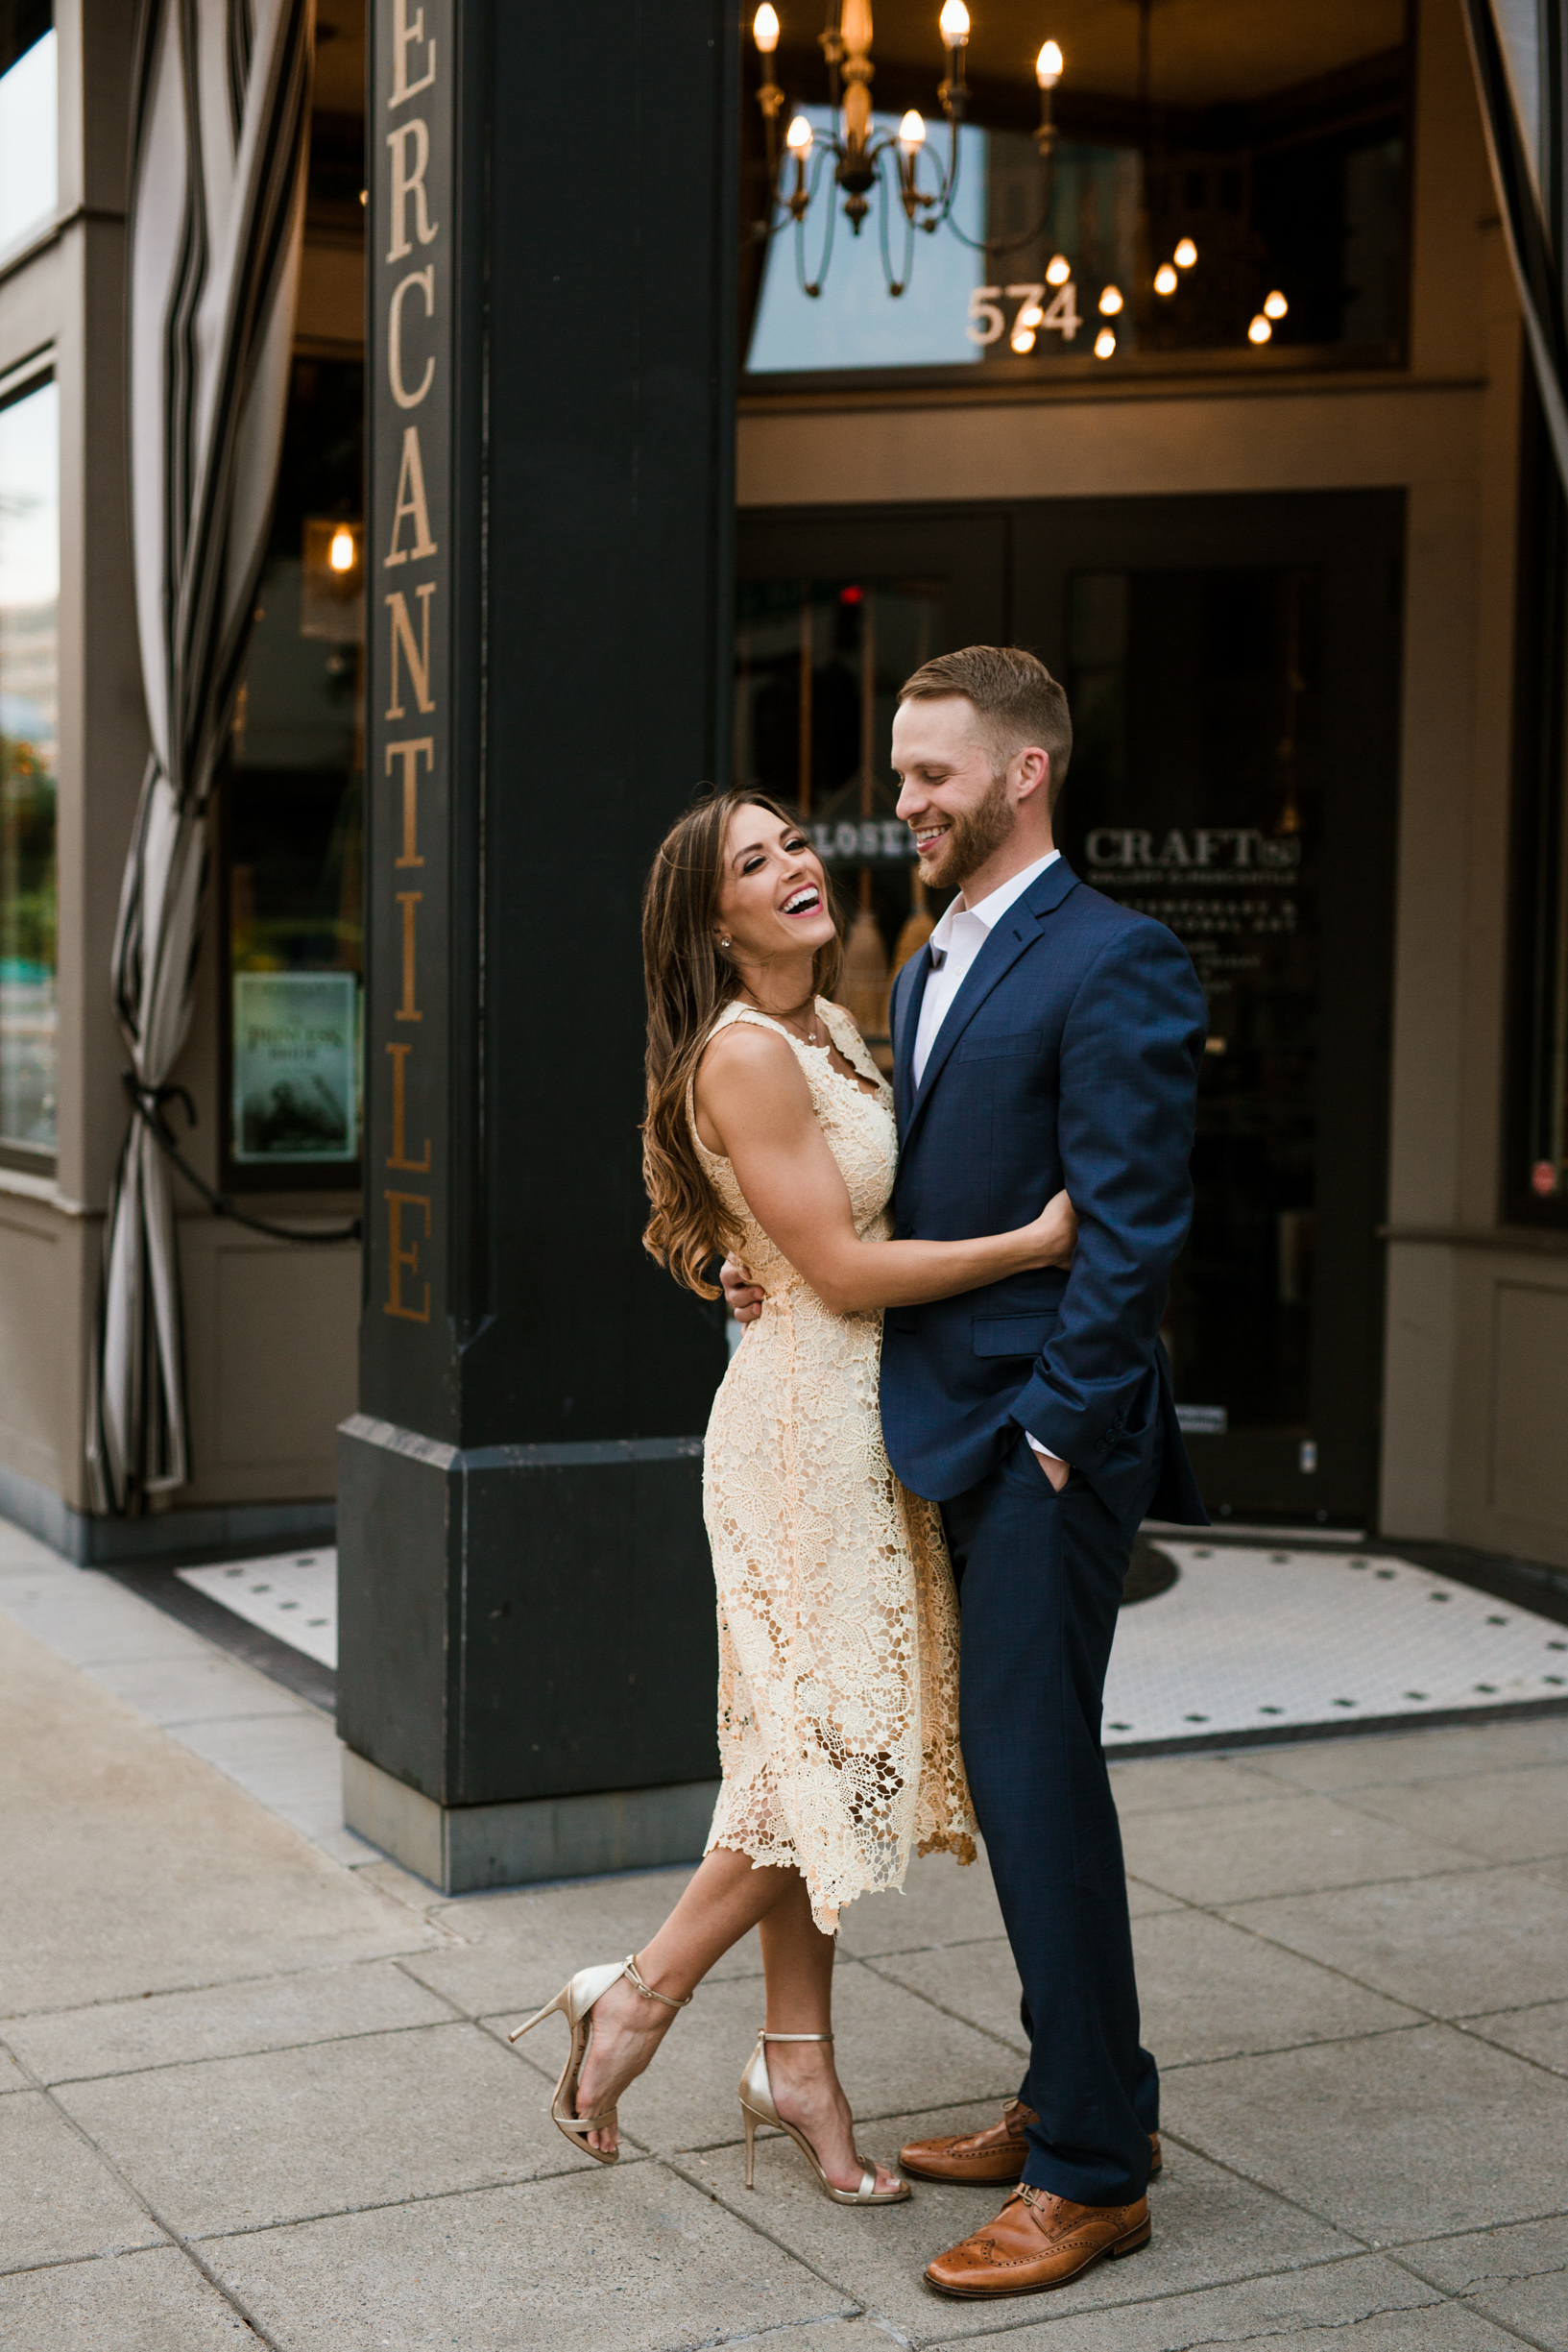 Victoria & Chad Engagement 2018 Crystal Ludwick Photo Louisville Kentucky Wedding Photographer WEBSITE (14 of 48).jpg